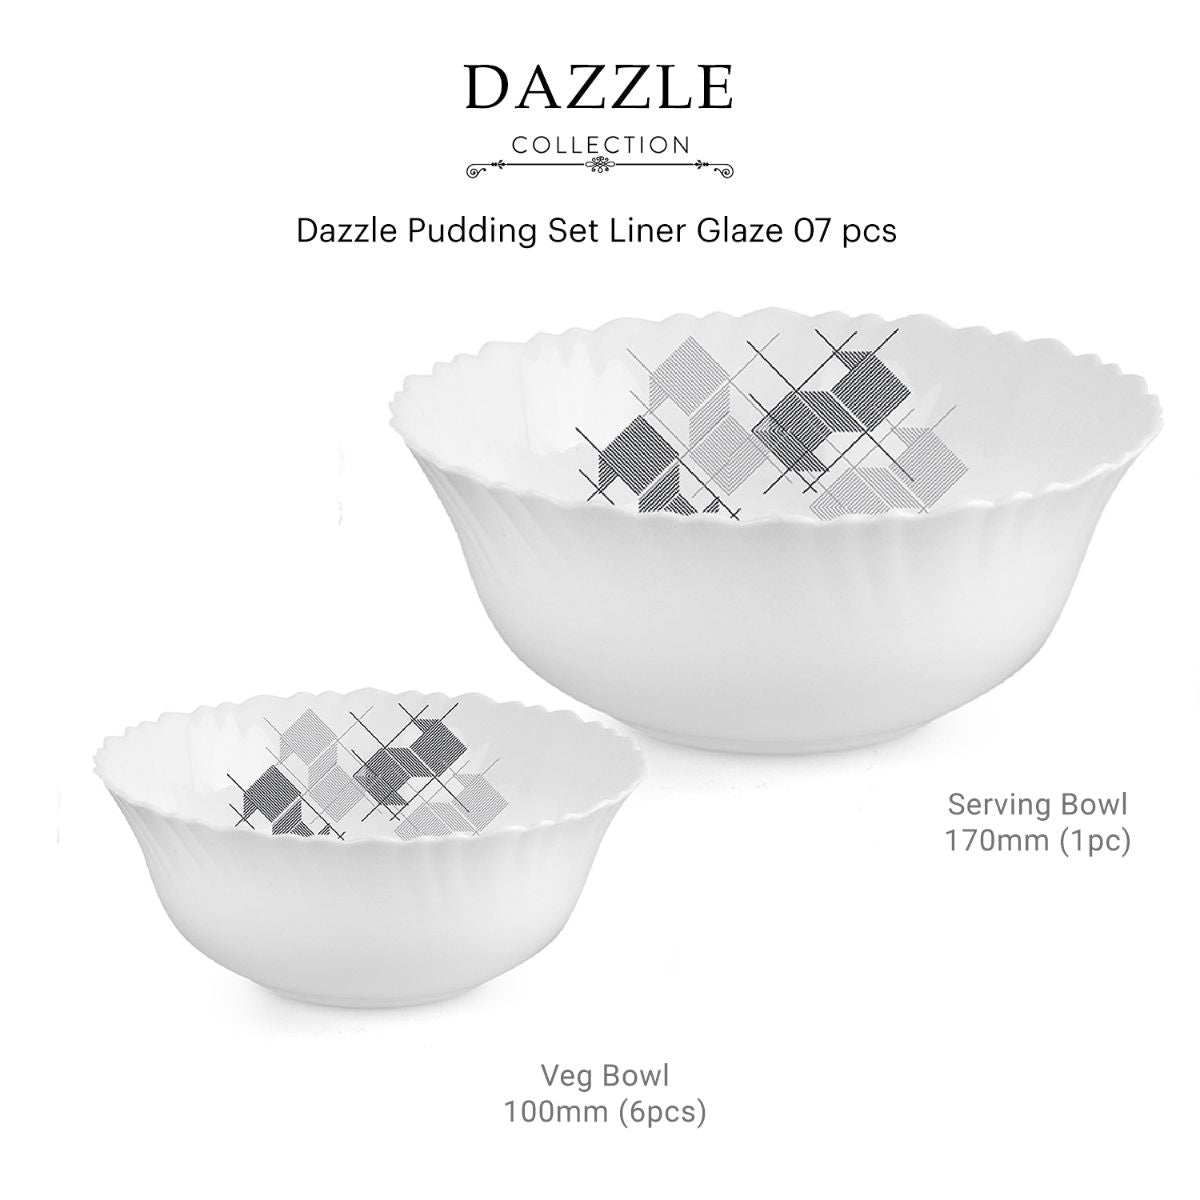 Dazzle Series Pudding Gift Set, 7 Pieces Linear Glaze / 7 Pieces